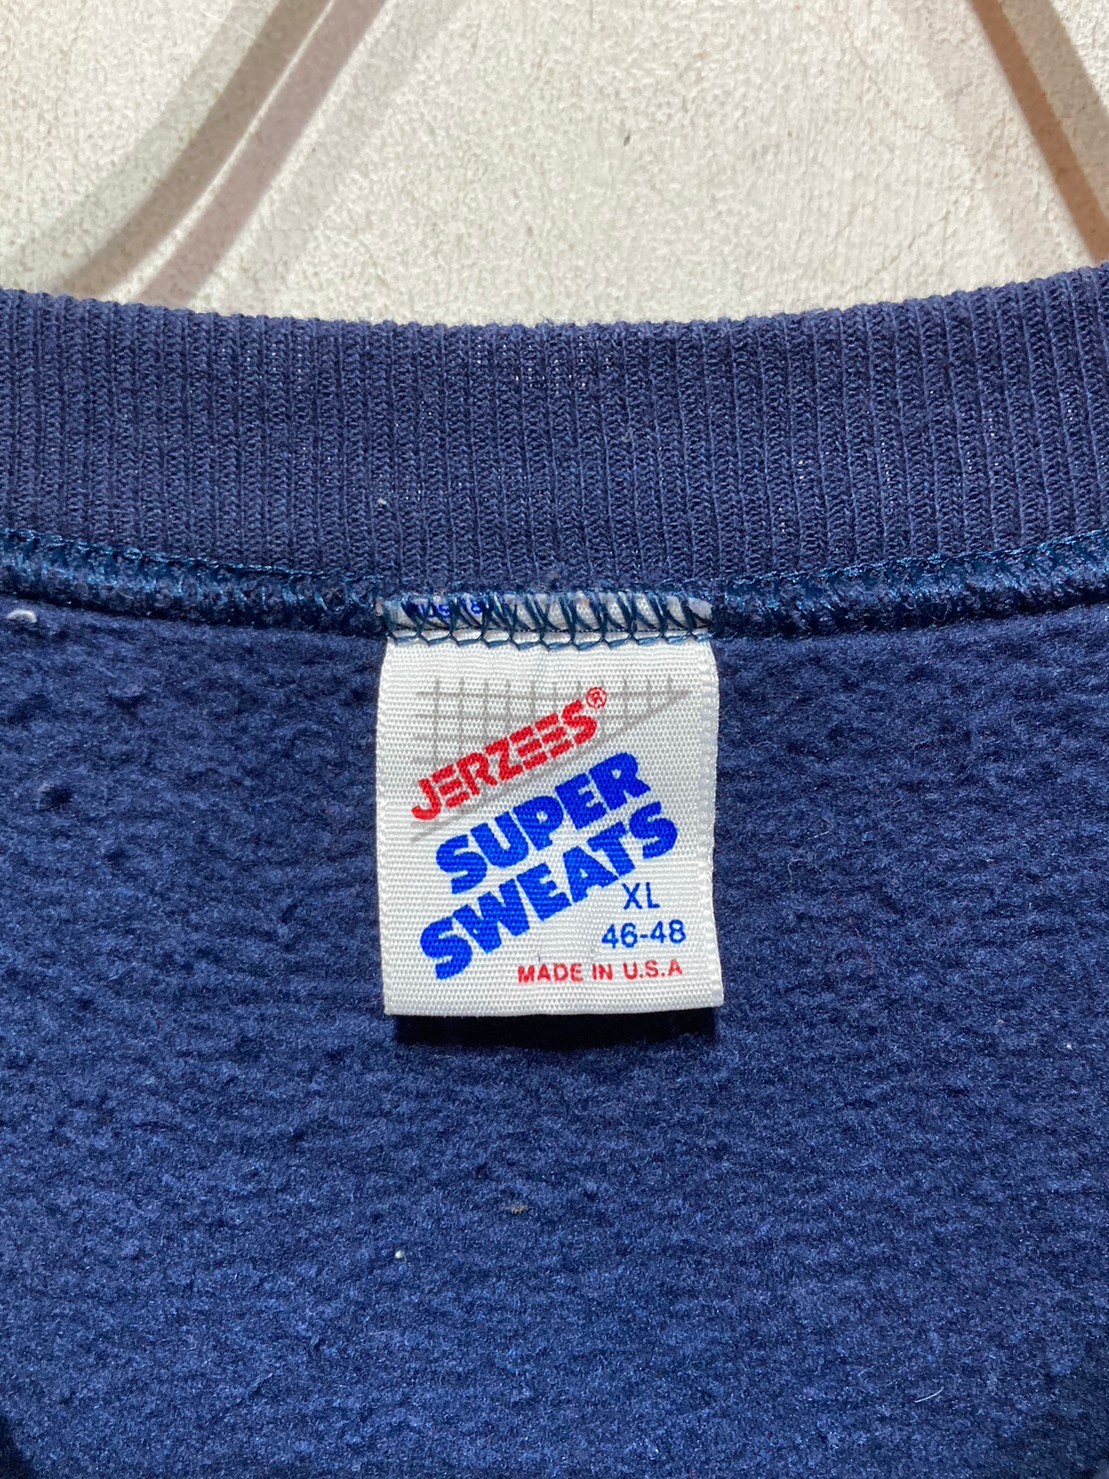 1990’s “PIPPIN” Print Sweat Shirt 「Made